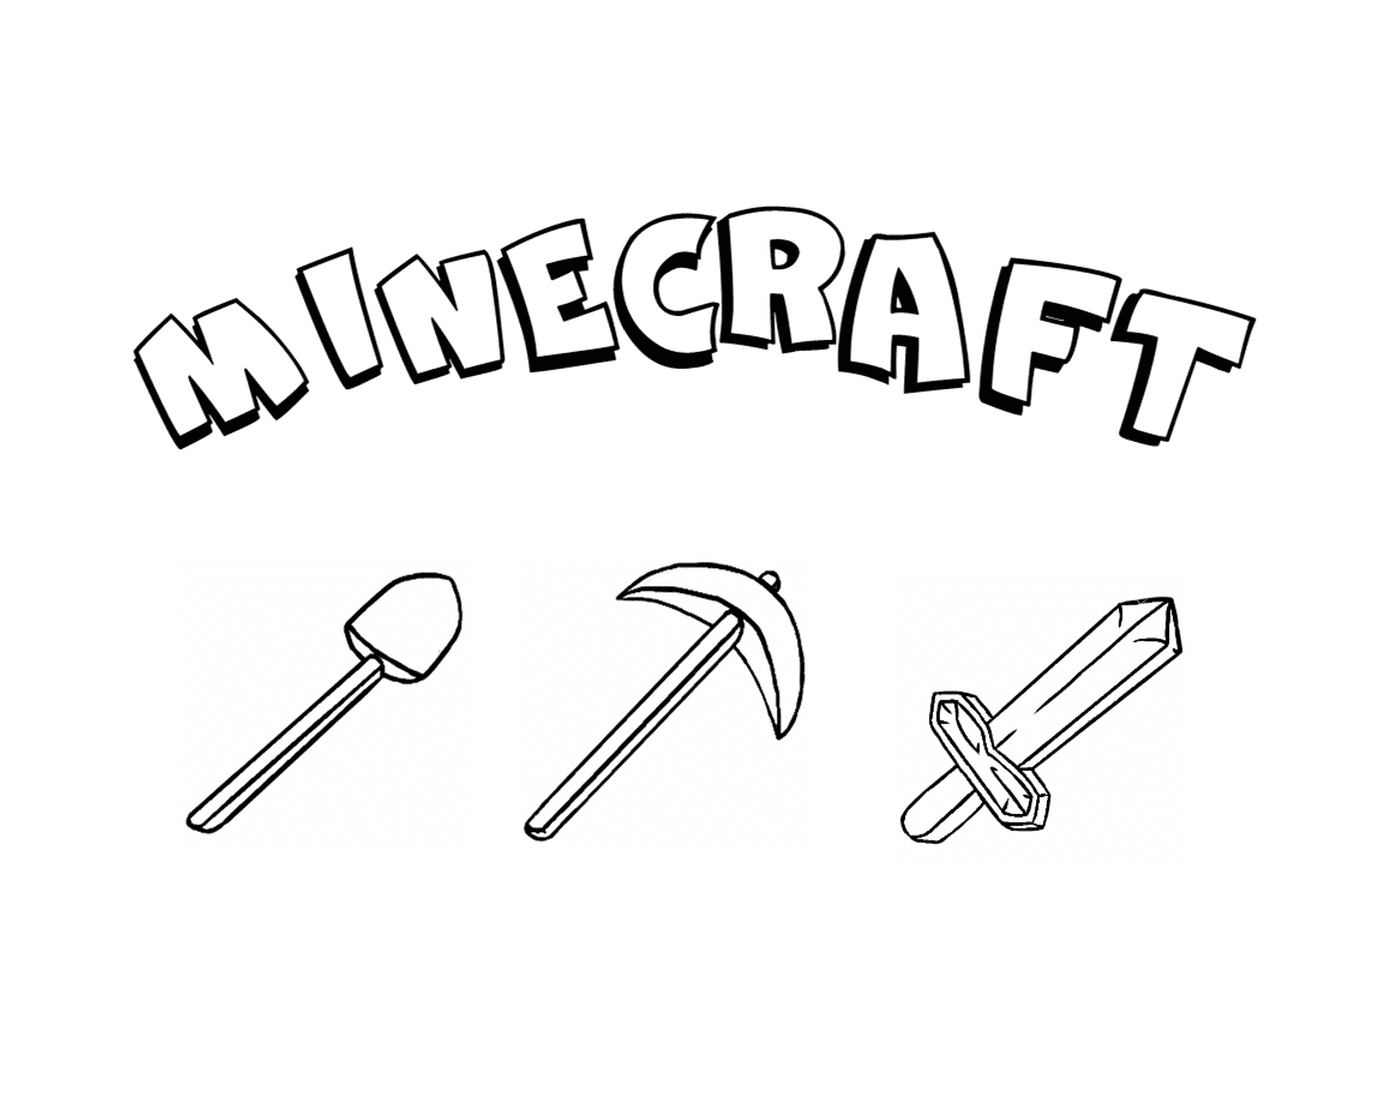  Herramientas Minecraft: pala, hacha, espada 